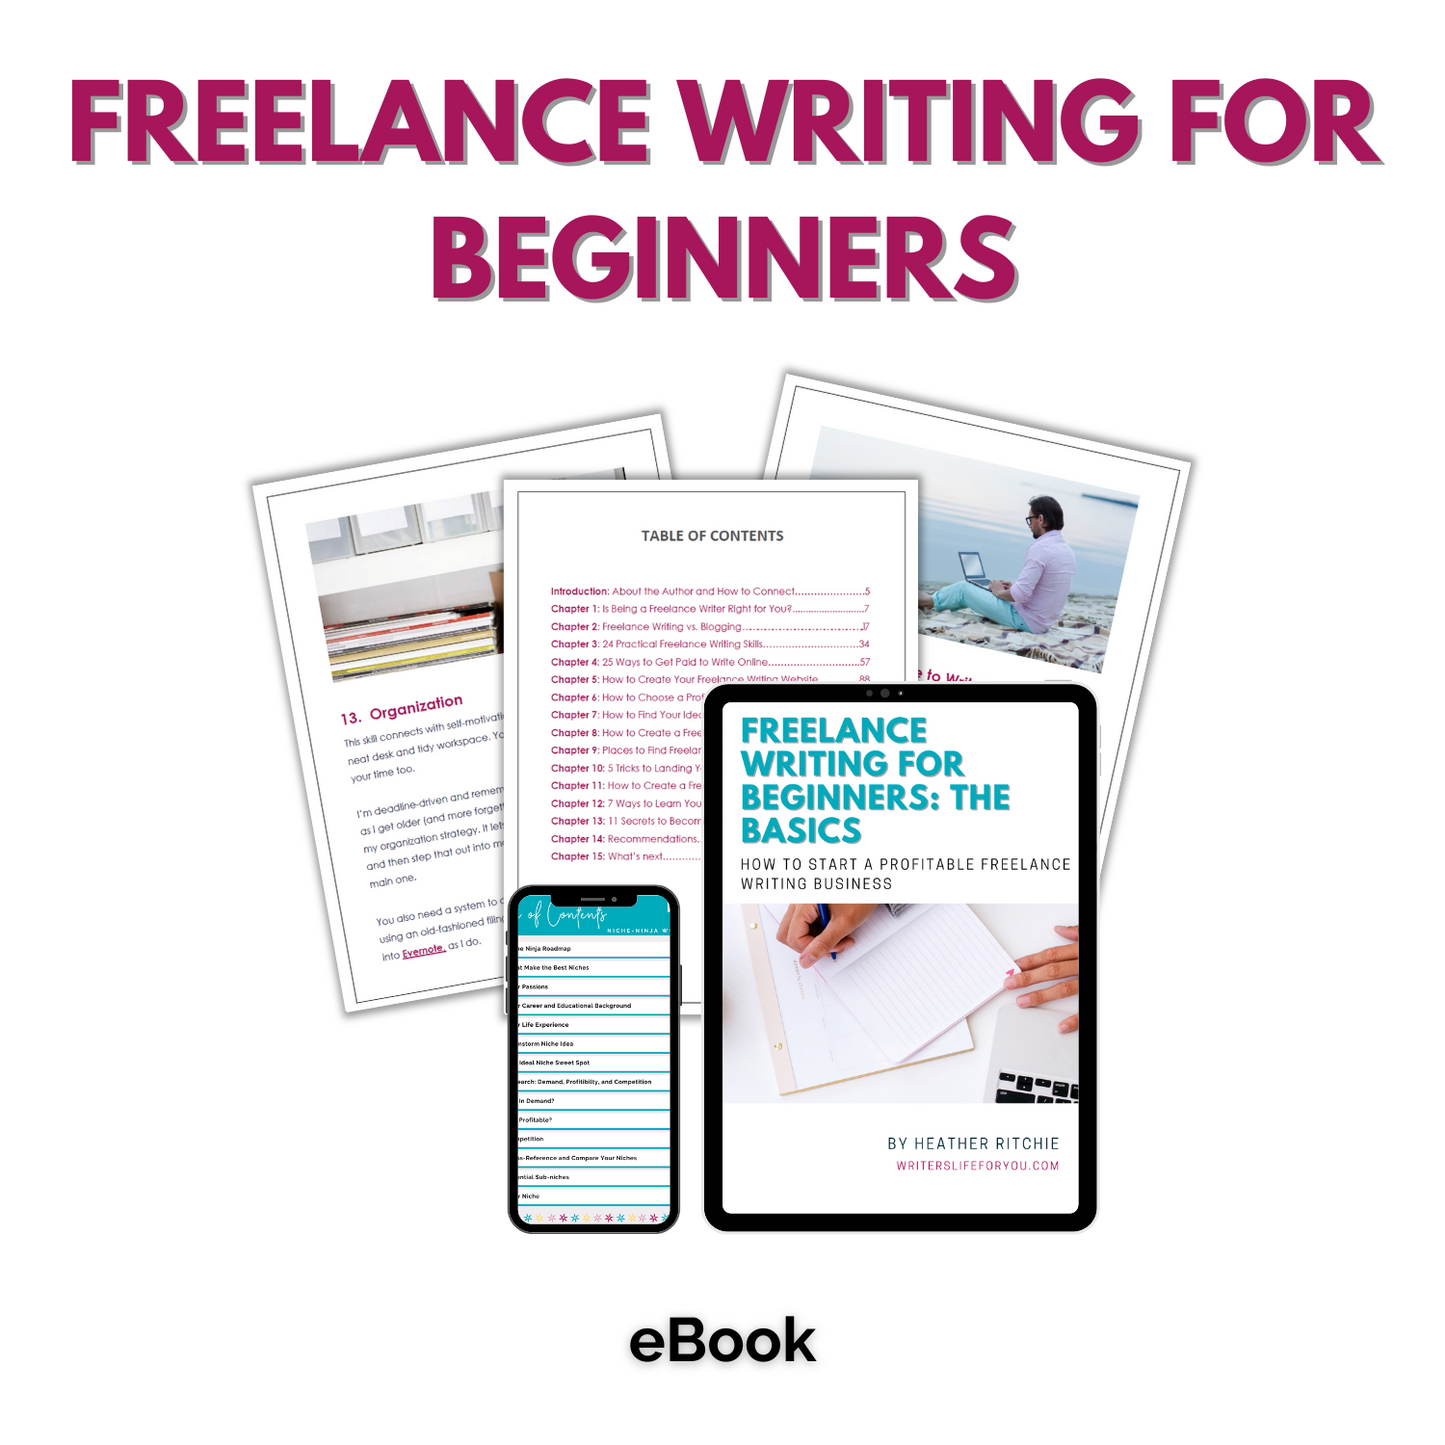 Freelance Writing for Beginners: The Basics